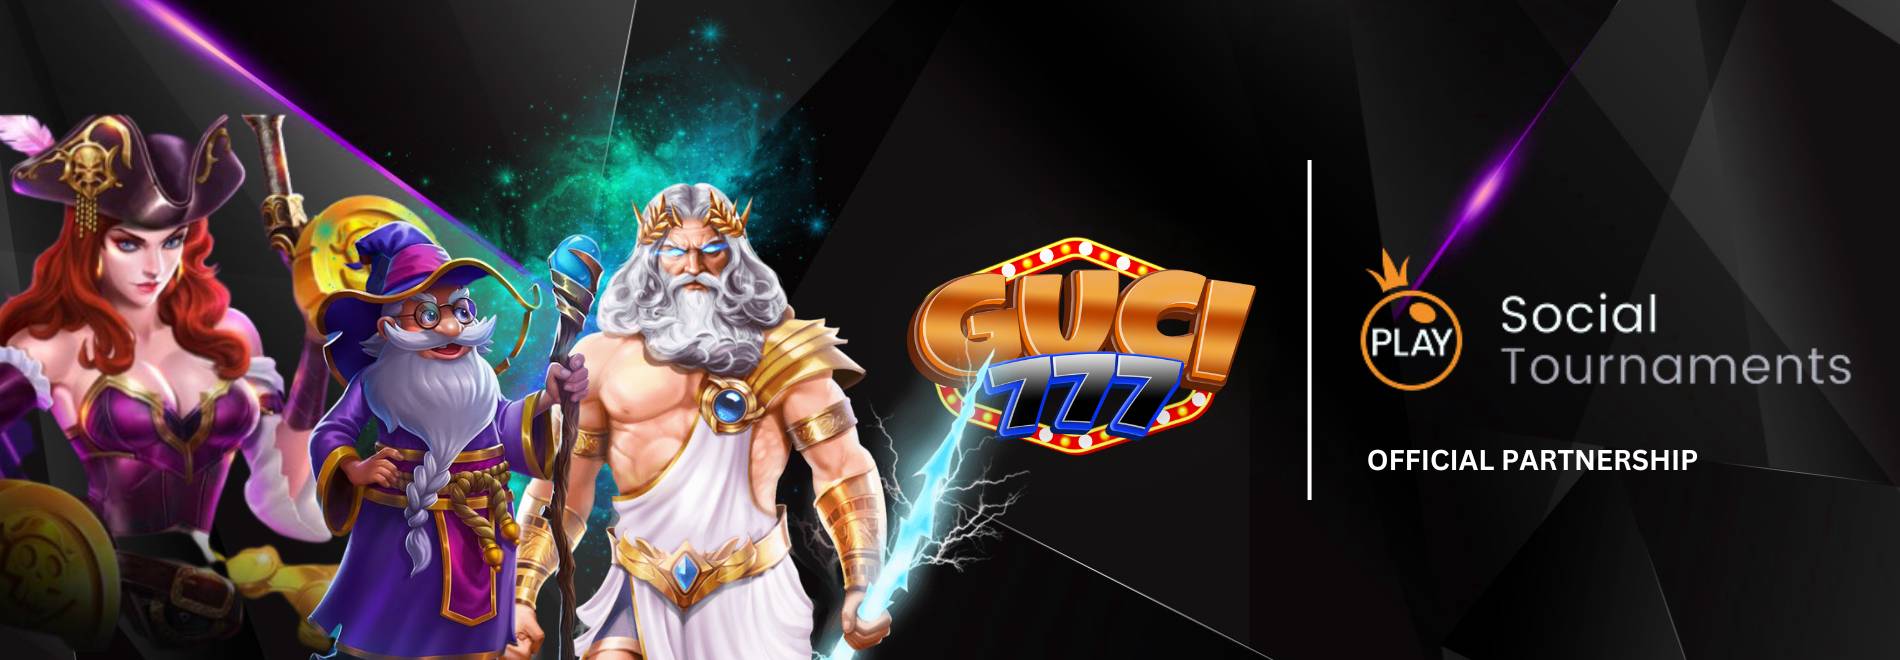 GUCI777 X Social Tournaments